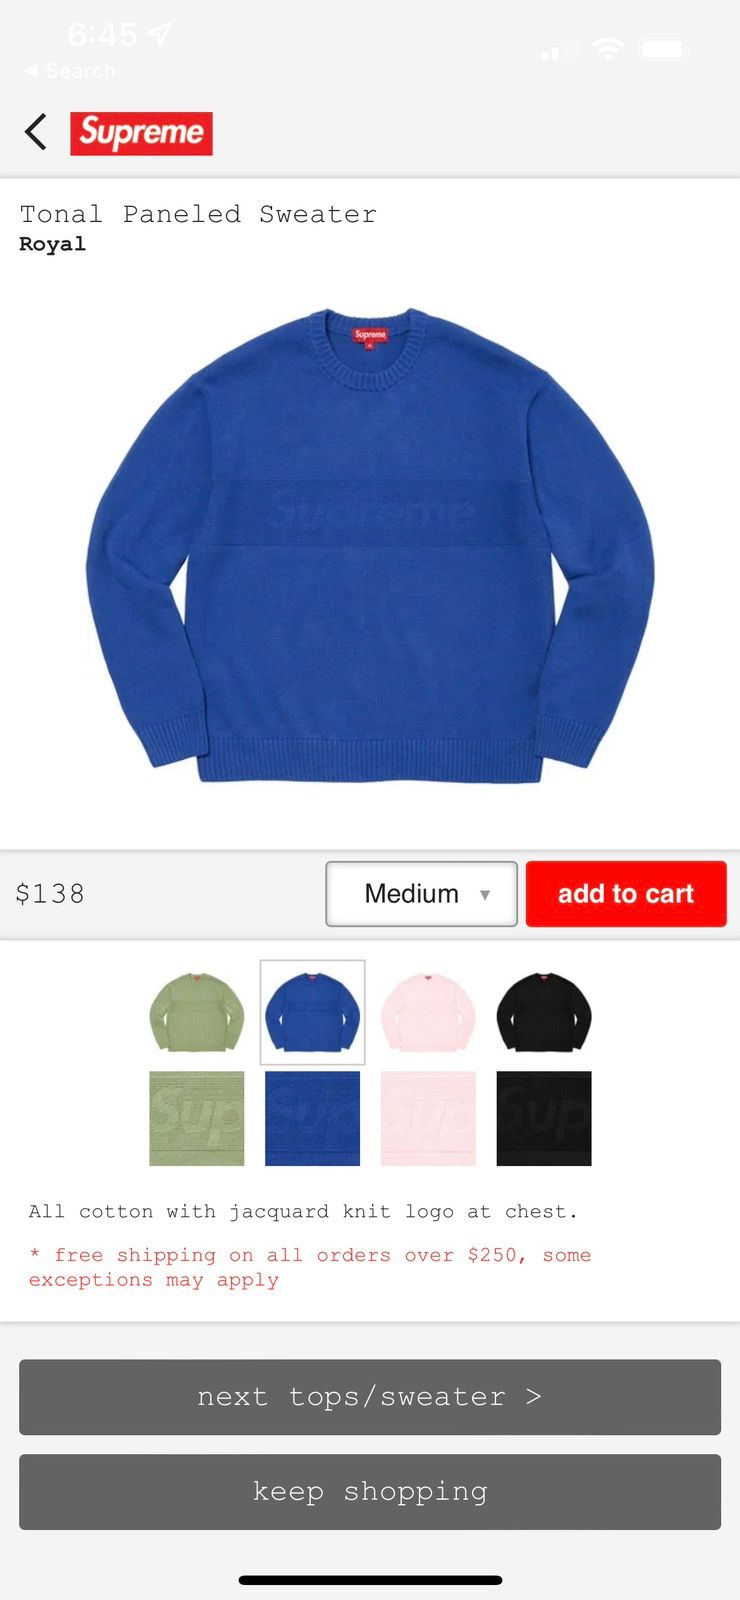 Supreme Supreme Tonal Paneled Sweater Medium | Grailed